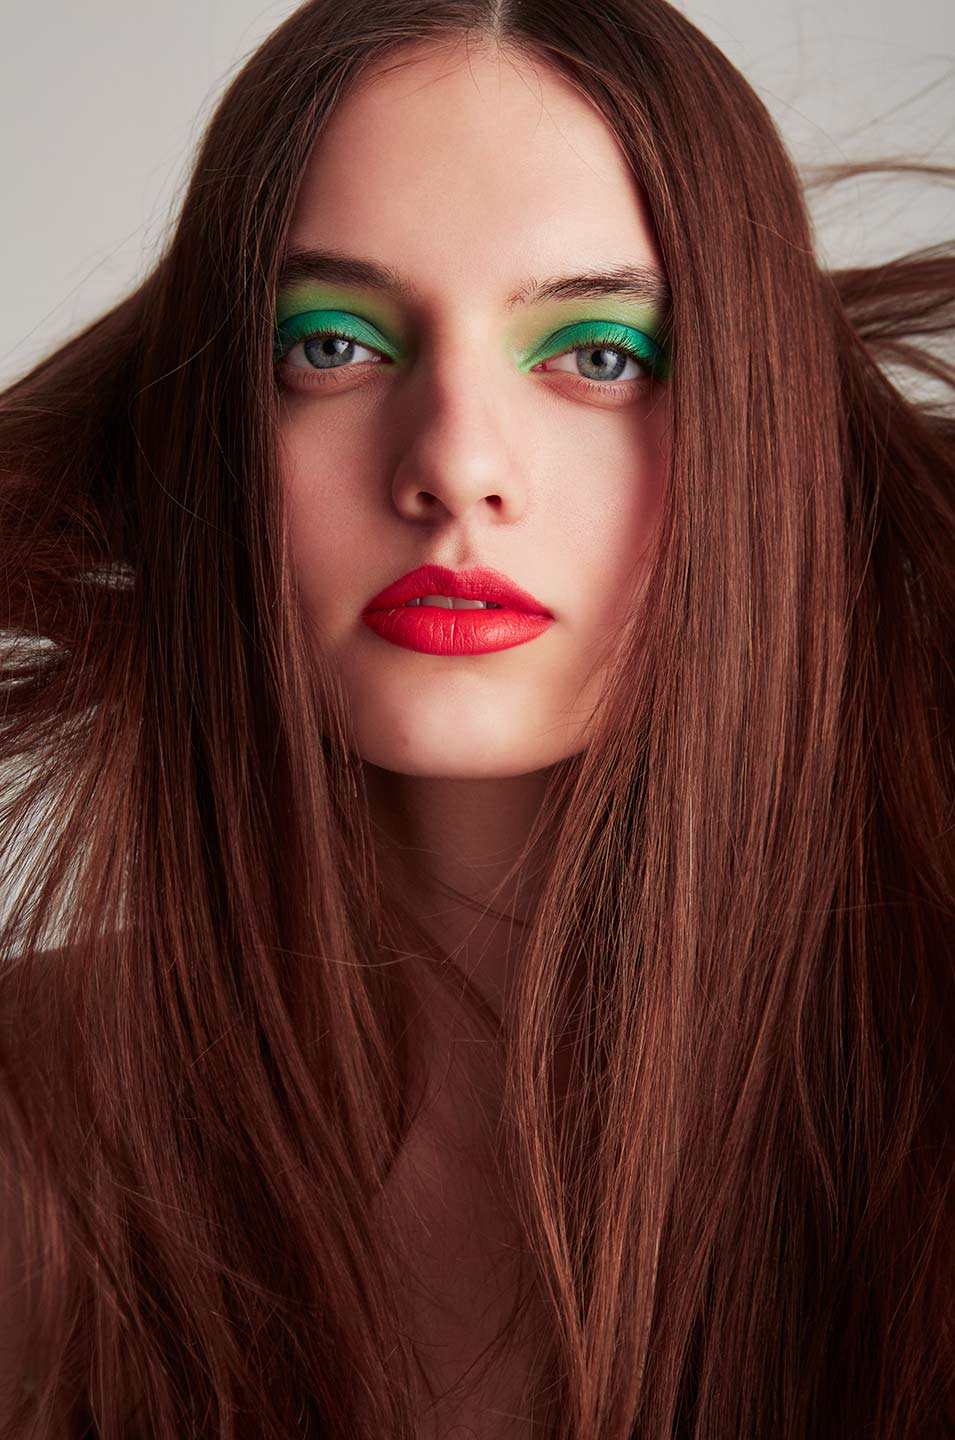 Natural Beauty Photogrpahy of model Melissa I Greg Sorensen I Fashion & Beauty Photographer I NYC